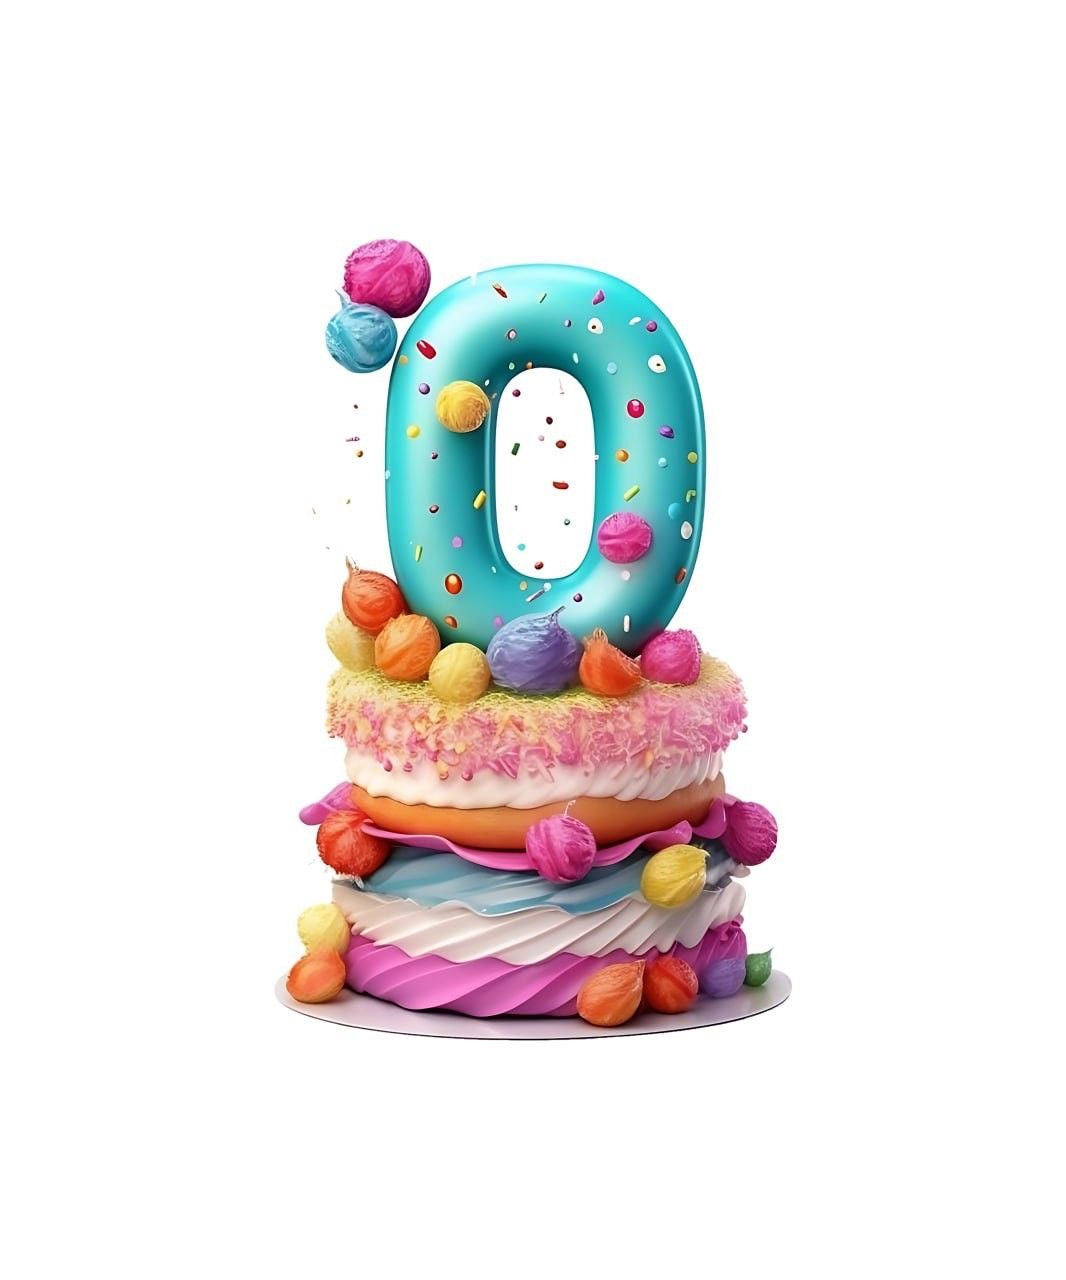 Kids Personalised Birthday Number PJs - Plain Pink or Blue PJs, Ages 6 Months - 10 Years